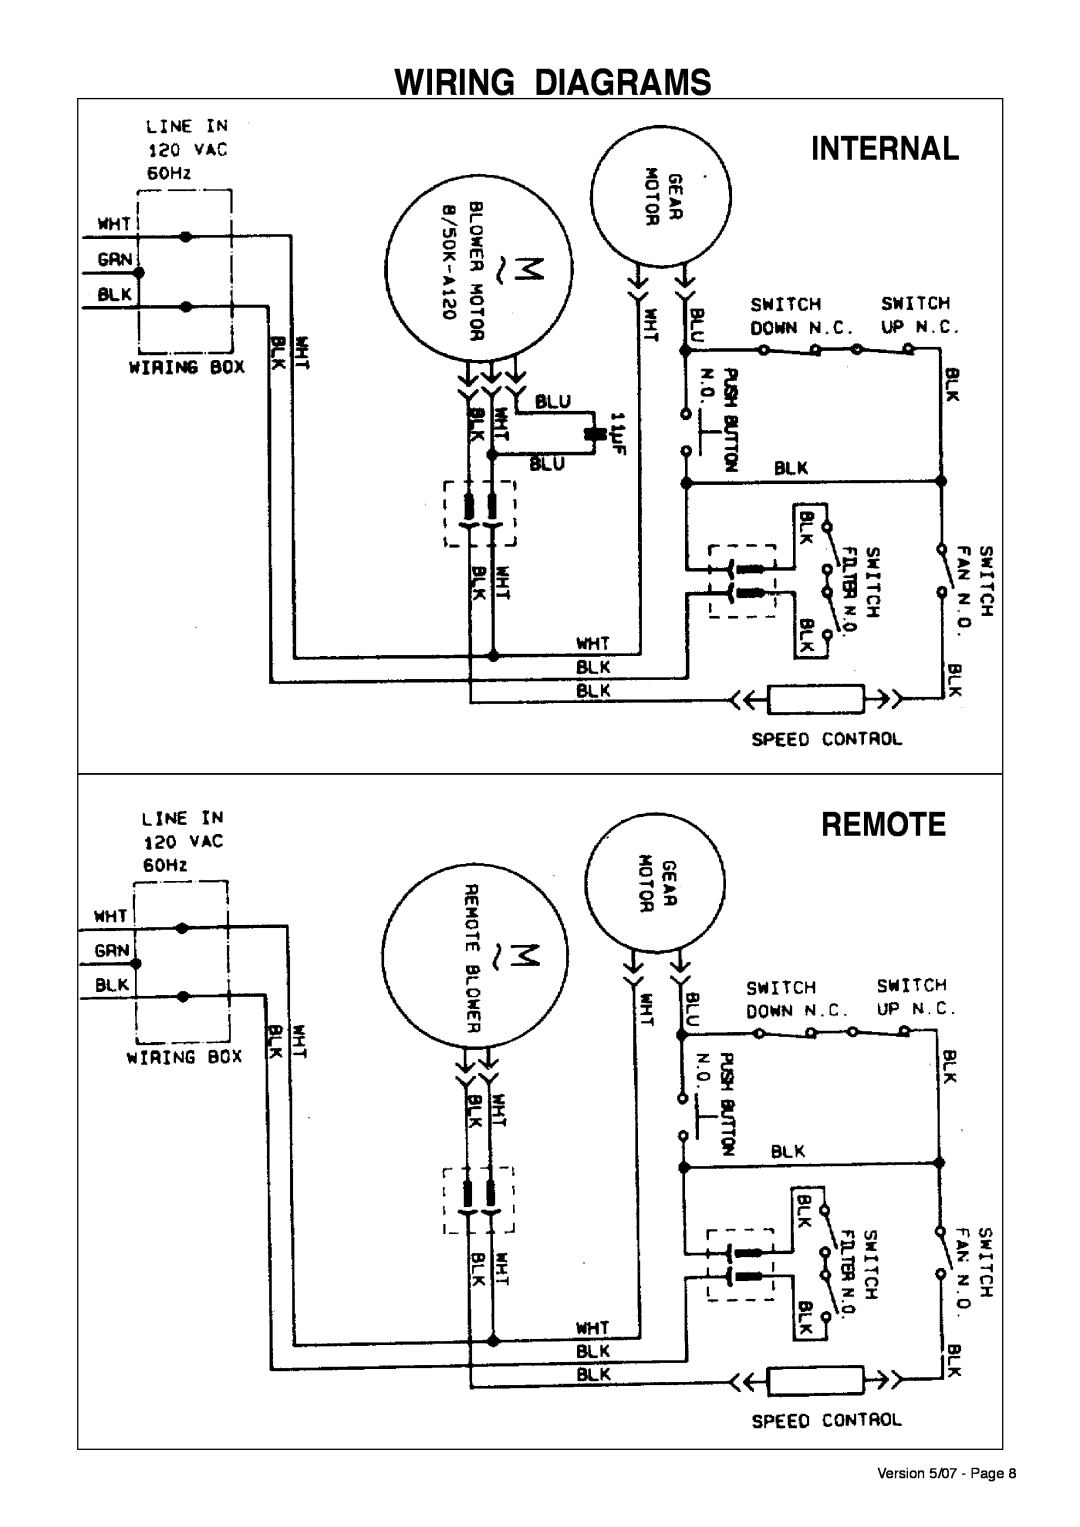 Faber Scirocco Downdraft Rangehood installation instructions Wiring Diagrams, Internal Remote 